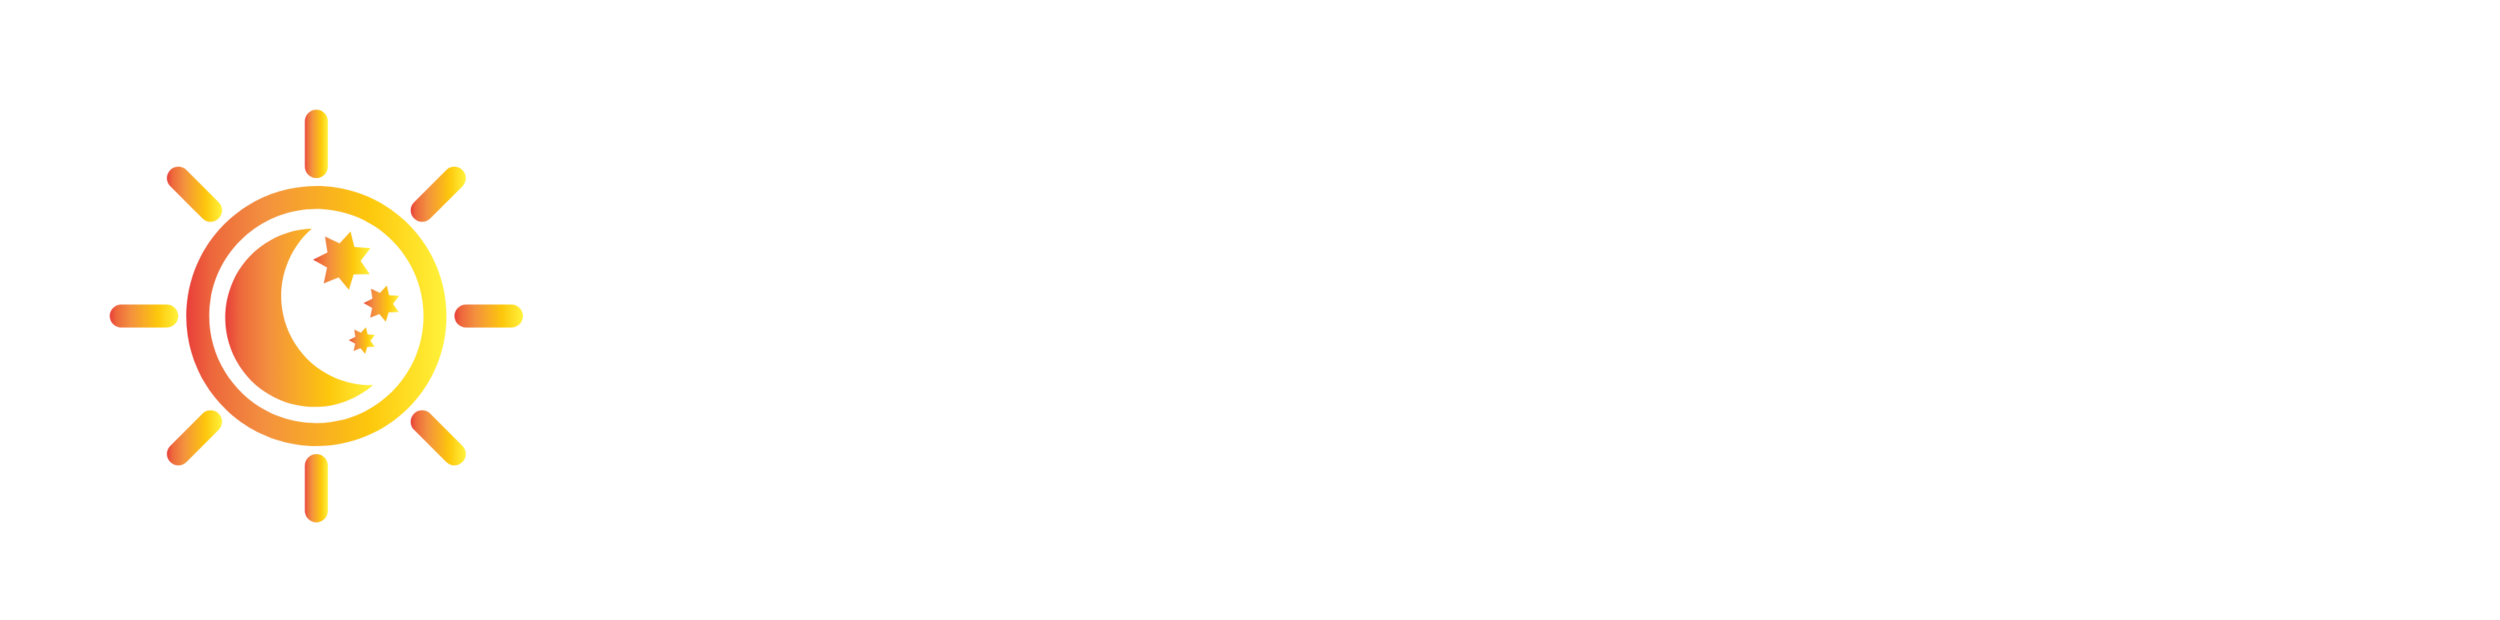 Radiance Design